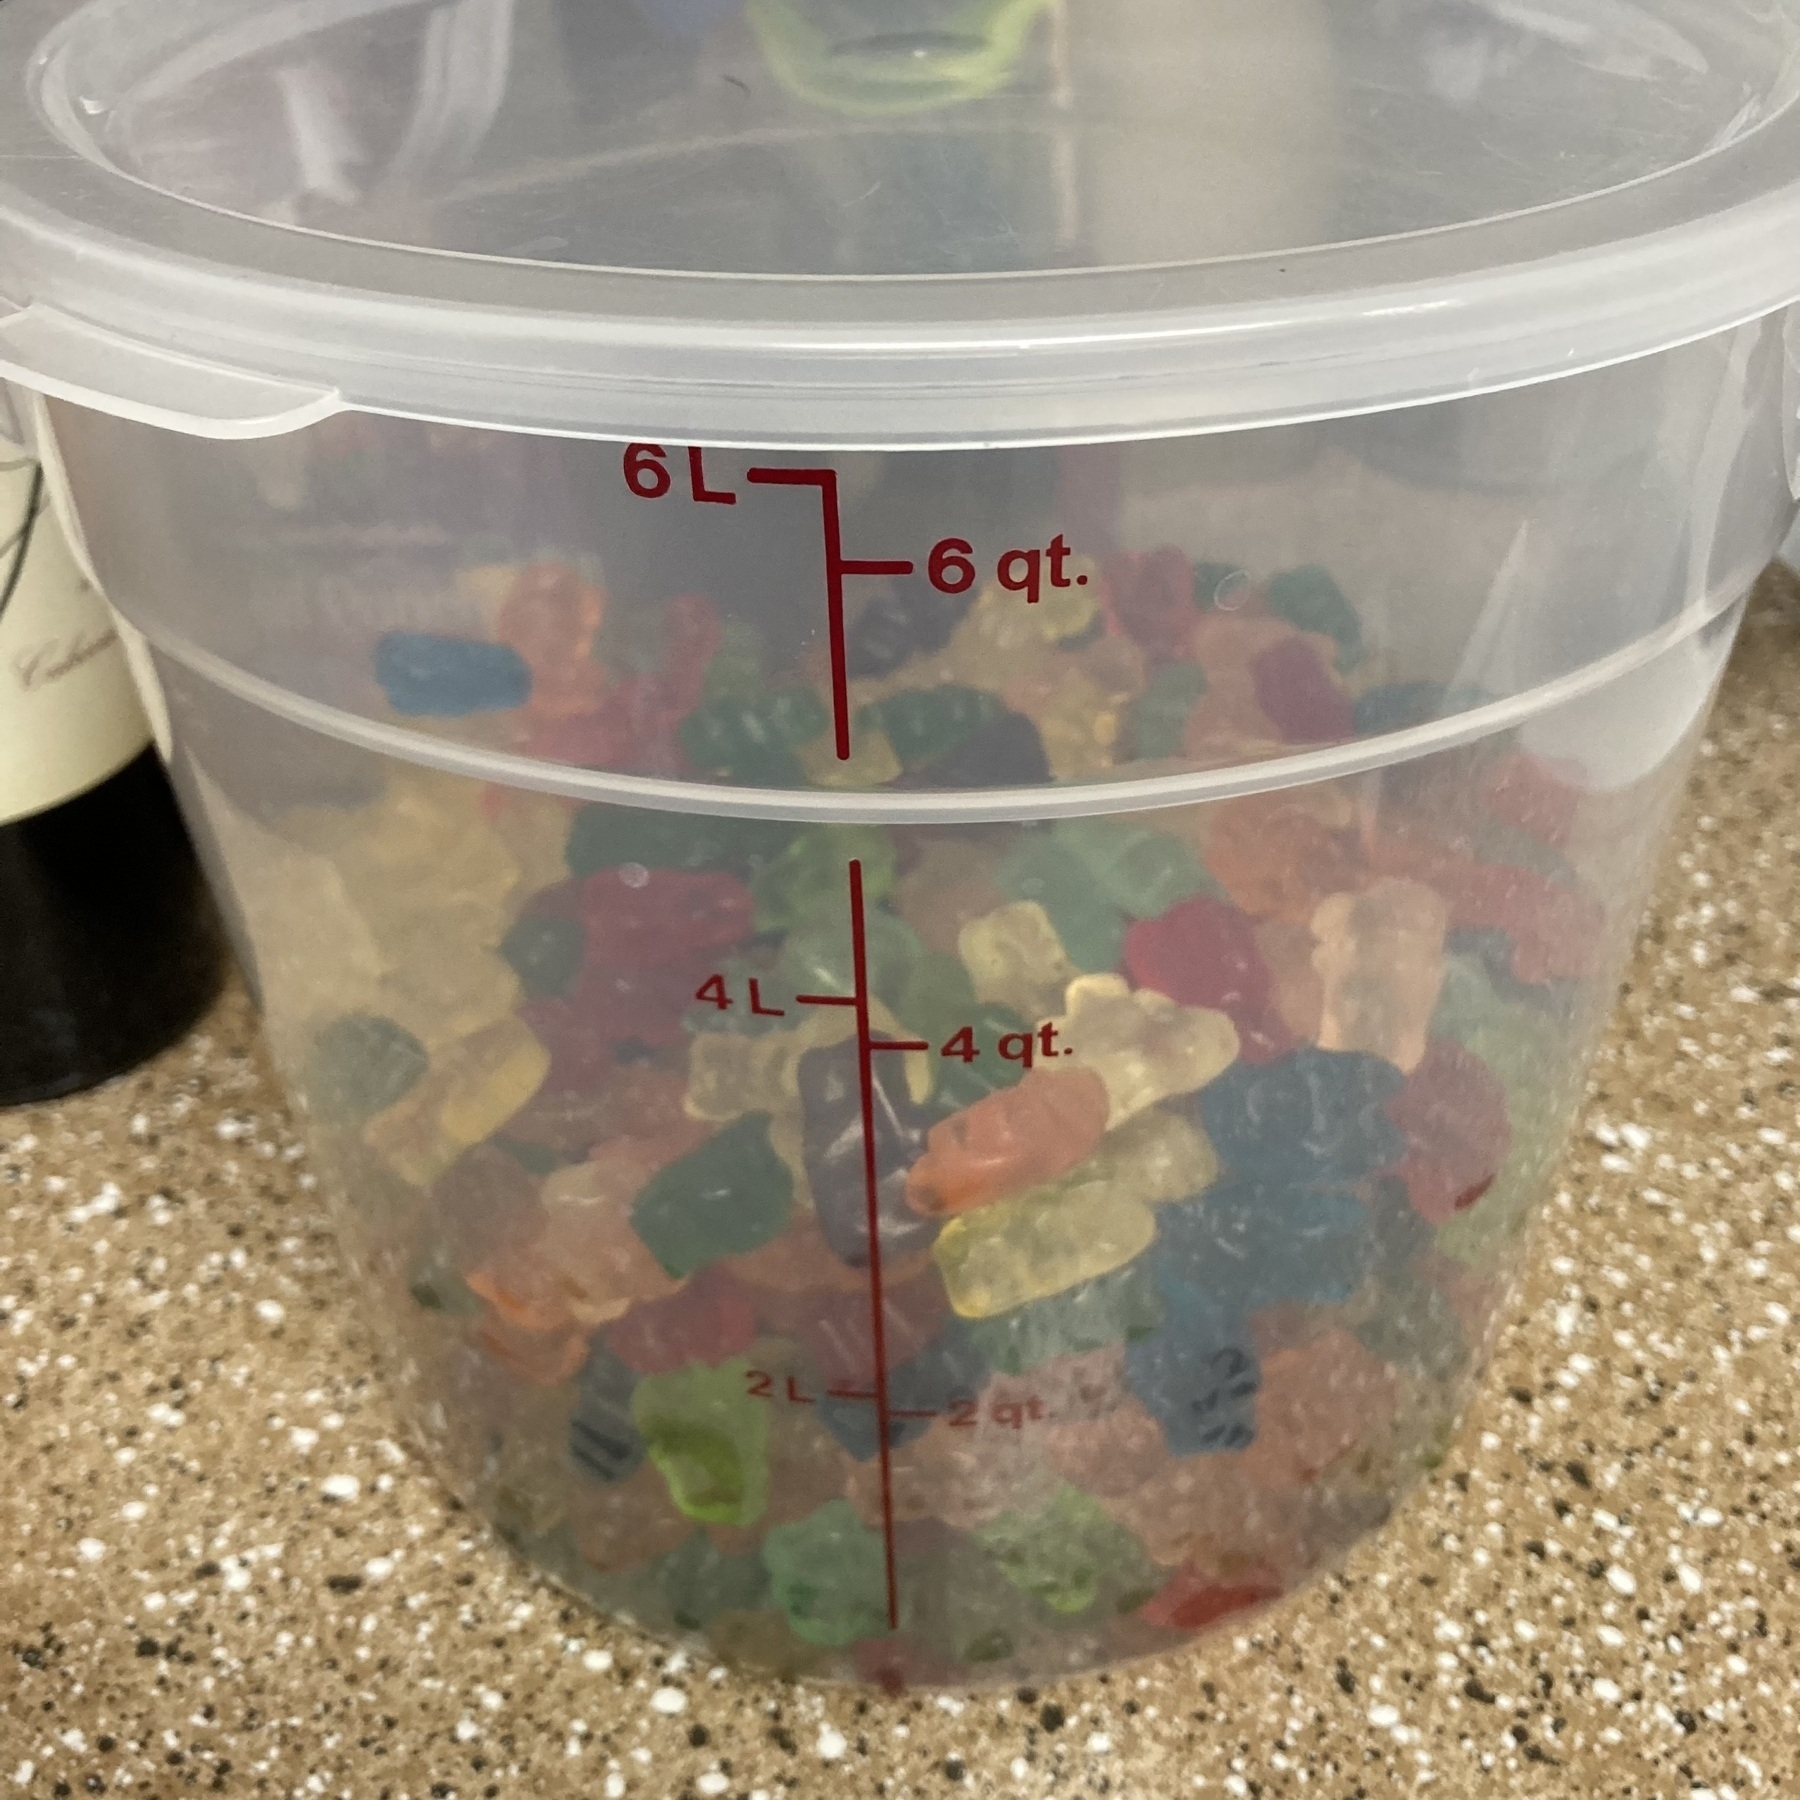 4 quarts of gummy bears in plastic container. 